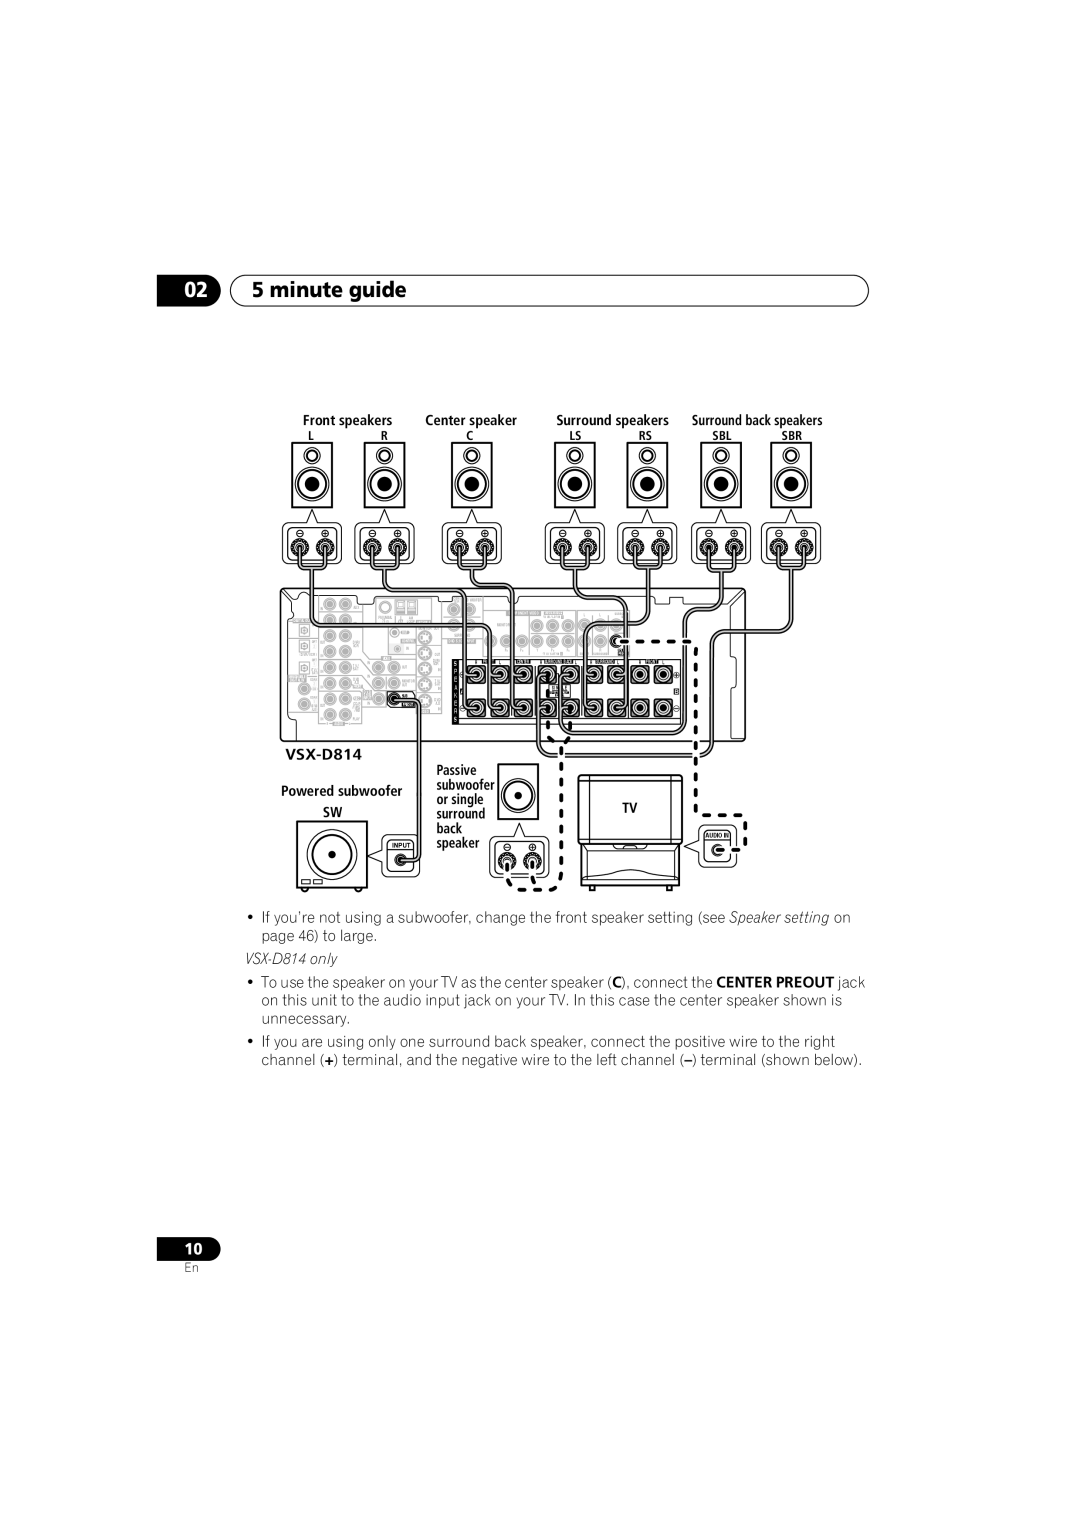 Pioneer VSX-D514, VSX-D714 manual minute guide, VSX-D814only, Passive, Powered subwoofer, back 